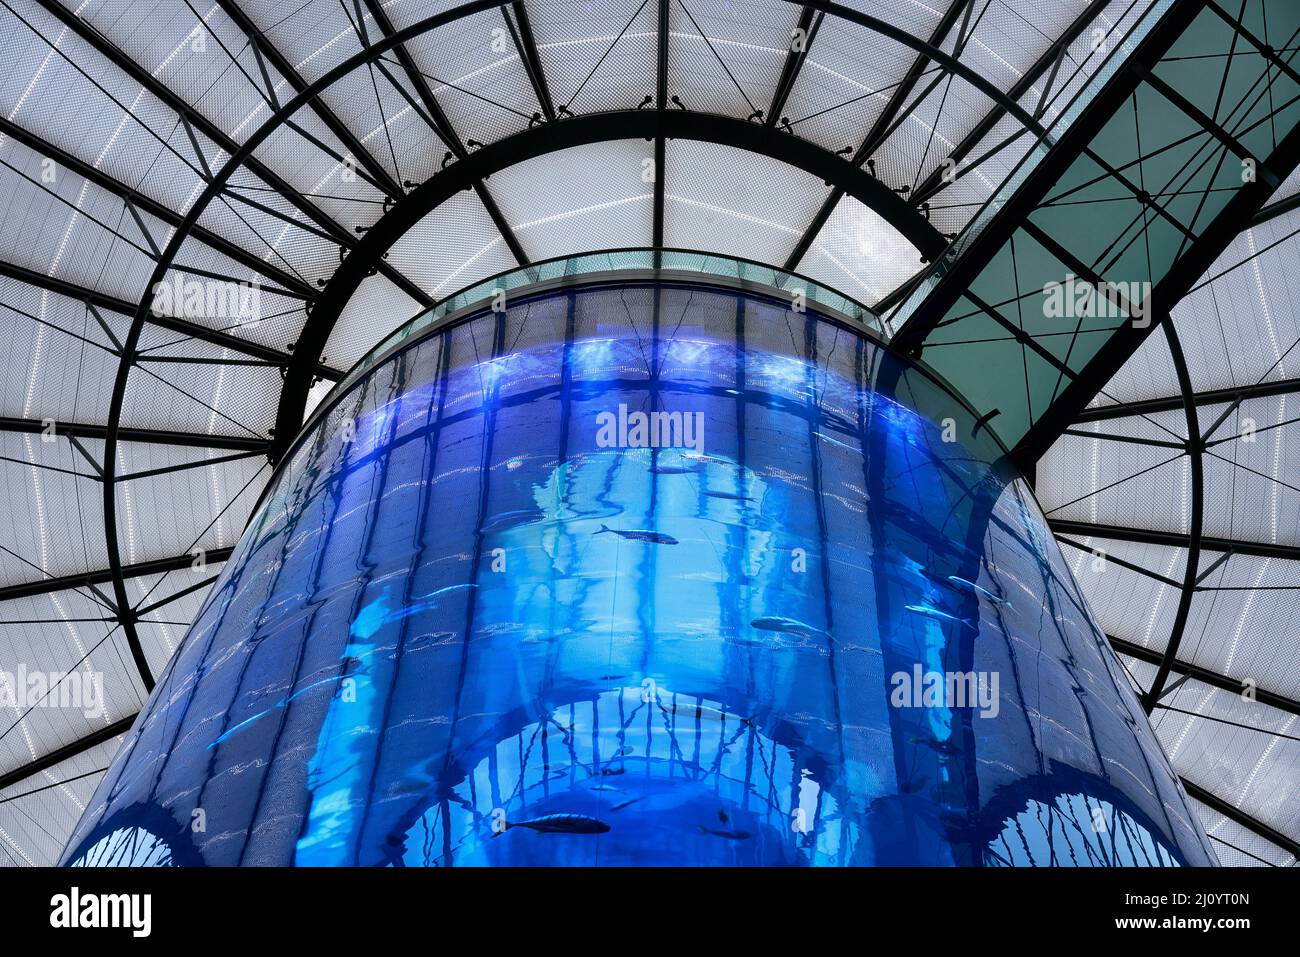 Aquarium inside Radisson Hotel Sea Life in Berlin Stock Photo